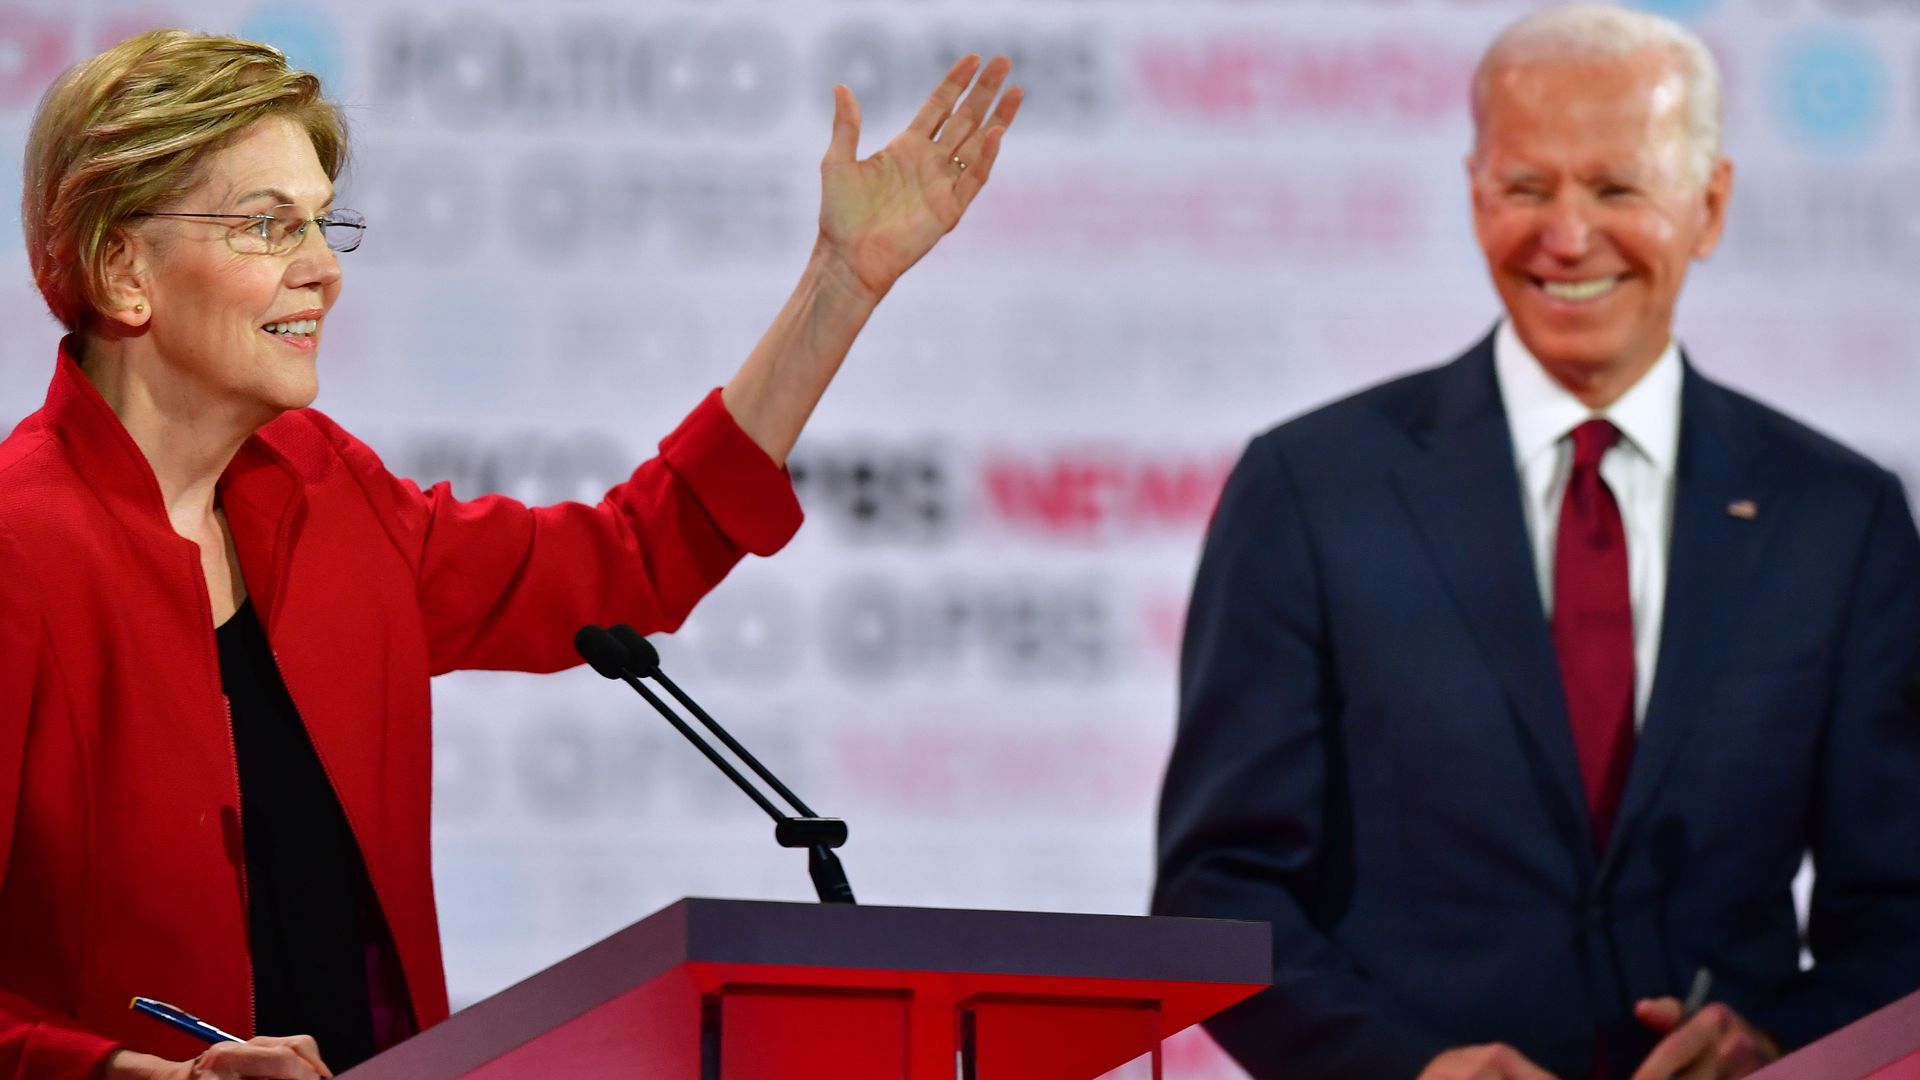 In this image, Elizabeth Warren and Joe Biden stand on stage